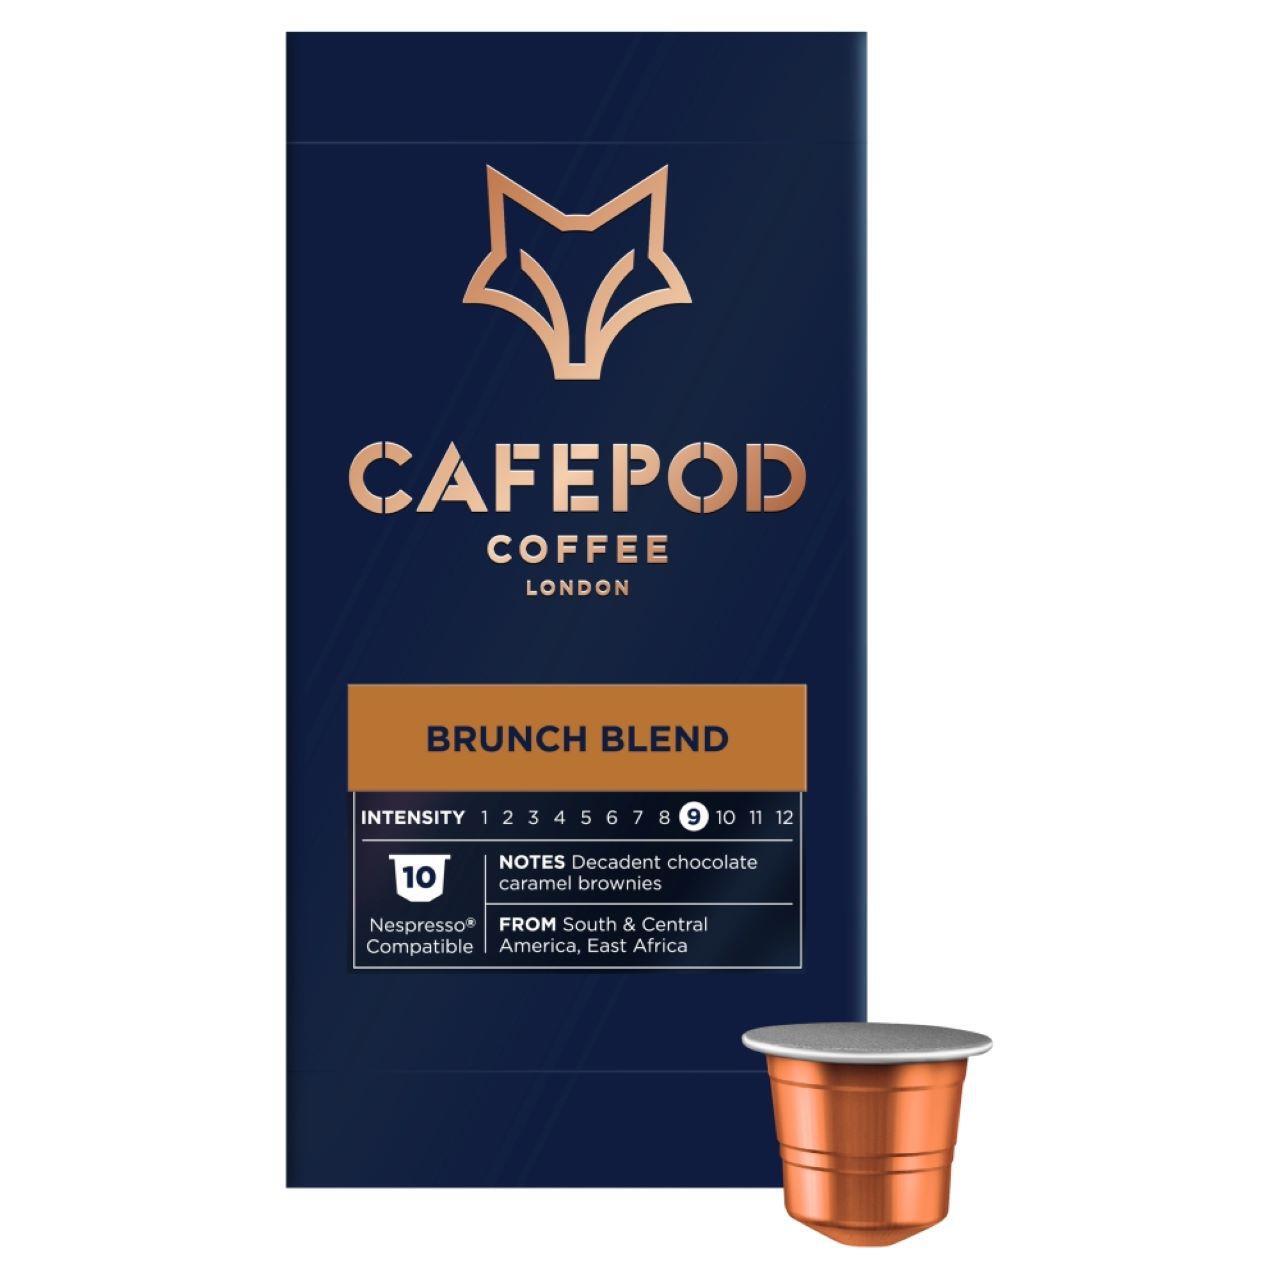 CafePod Brunch Blend Nespresso Compatible Aluminium Coffee Pods 10 per pack